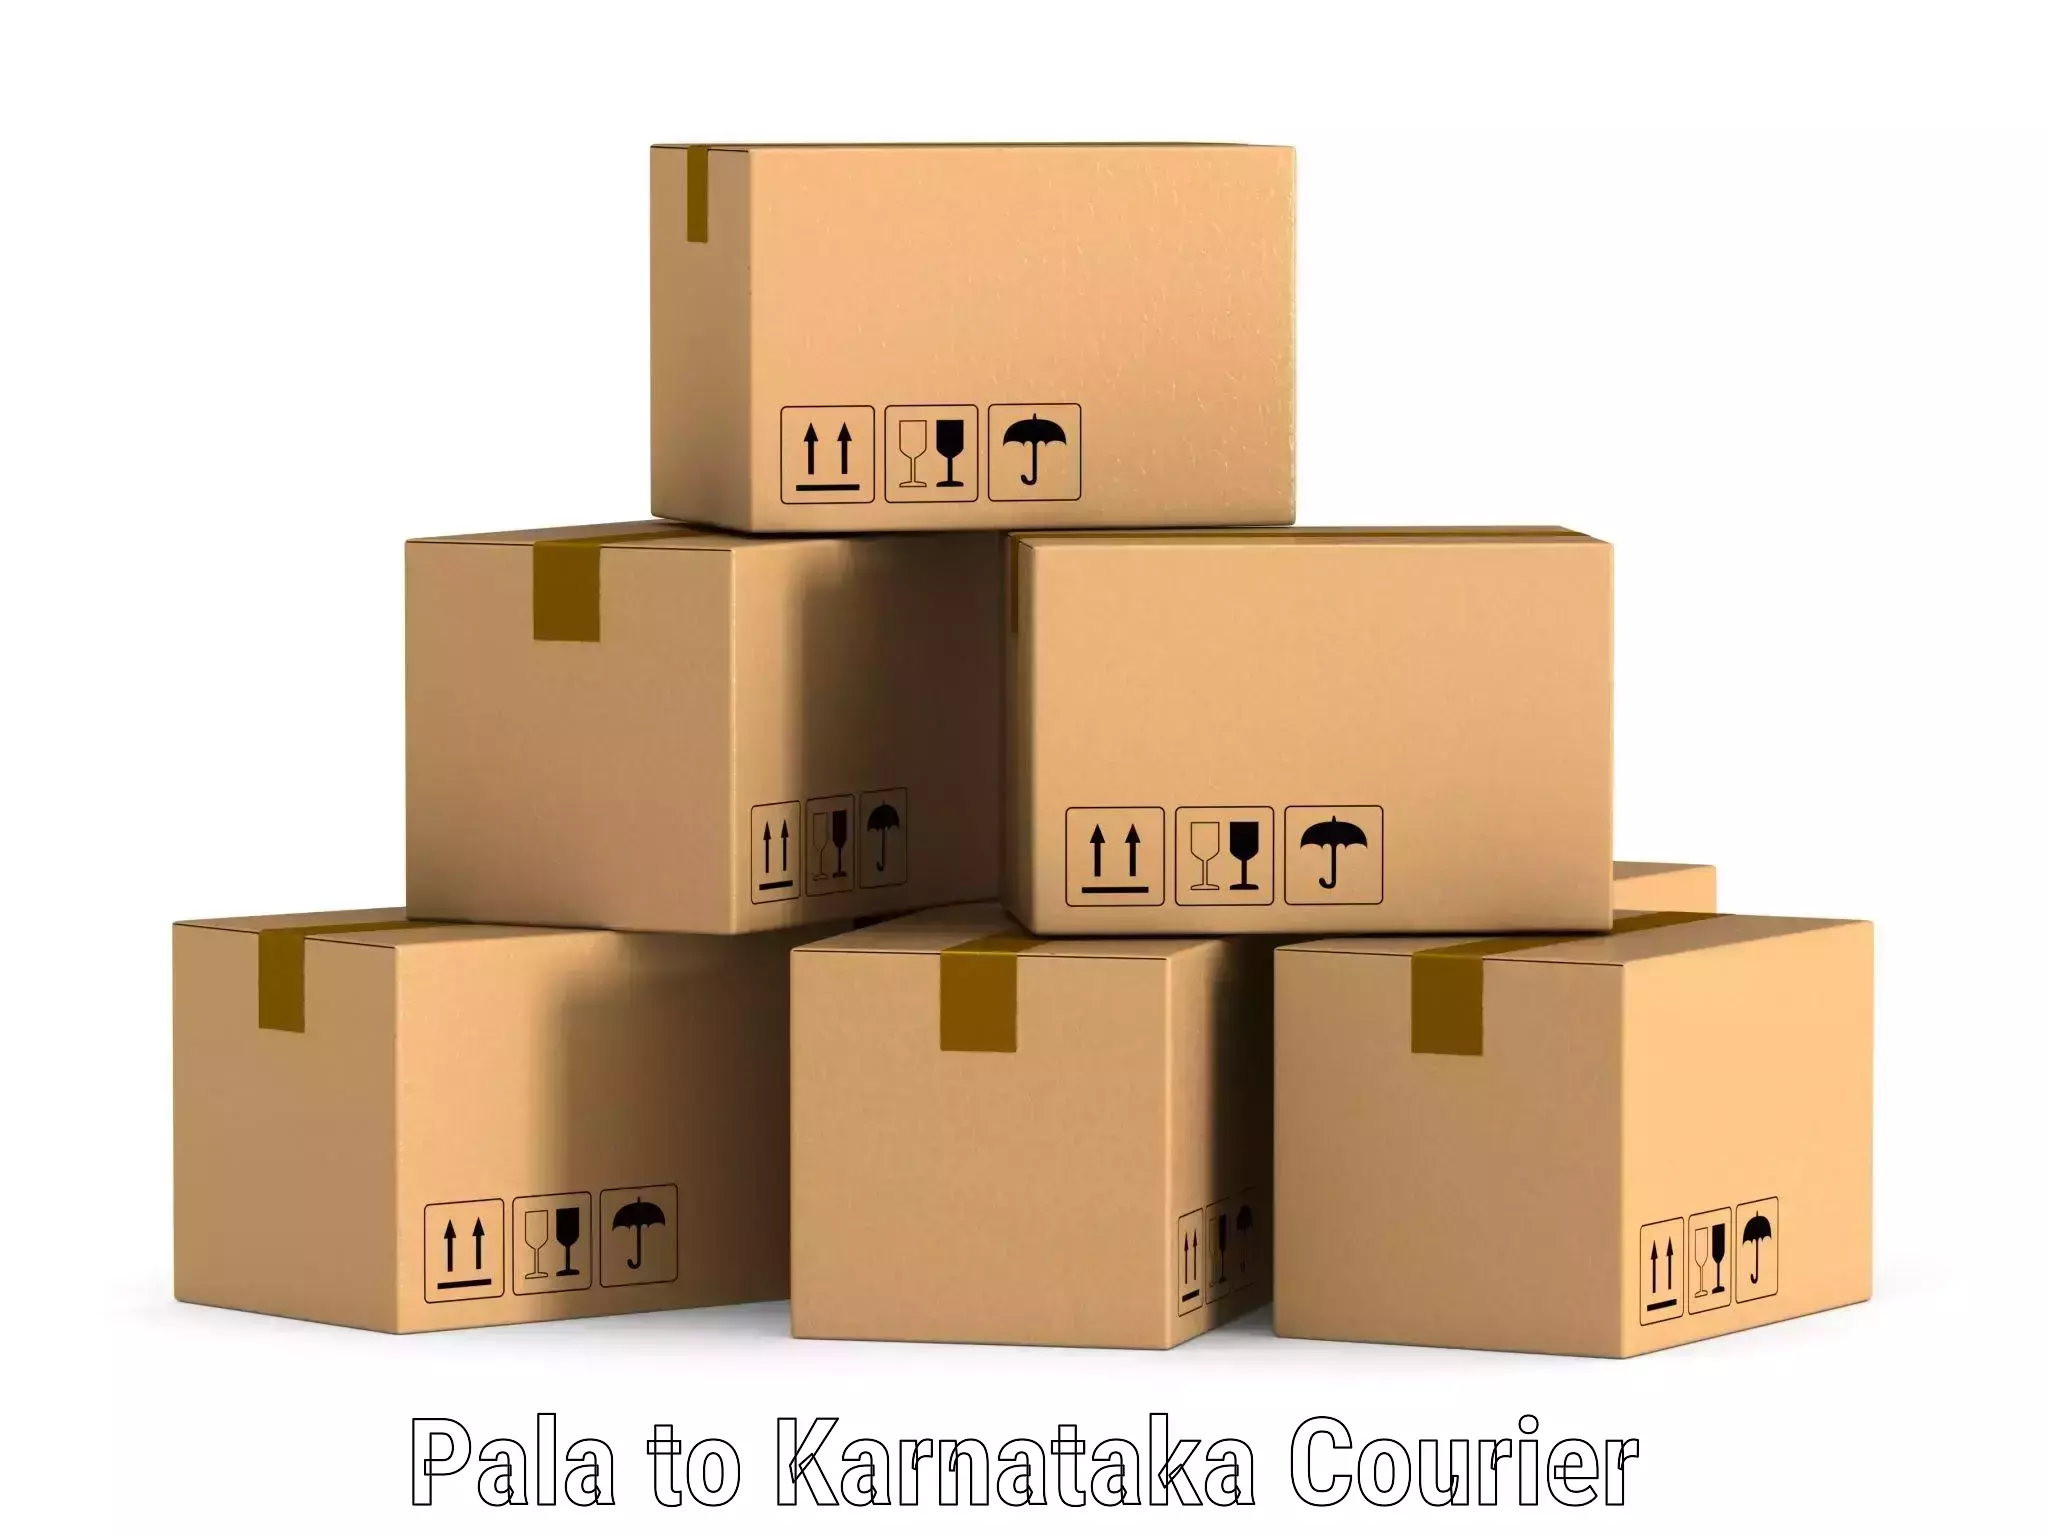 Digital courier platforms Pala to Eedu